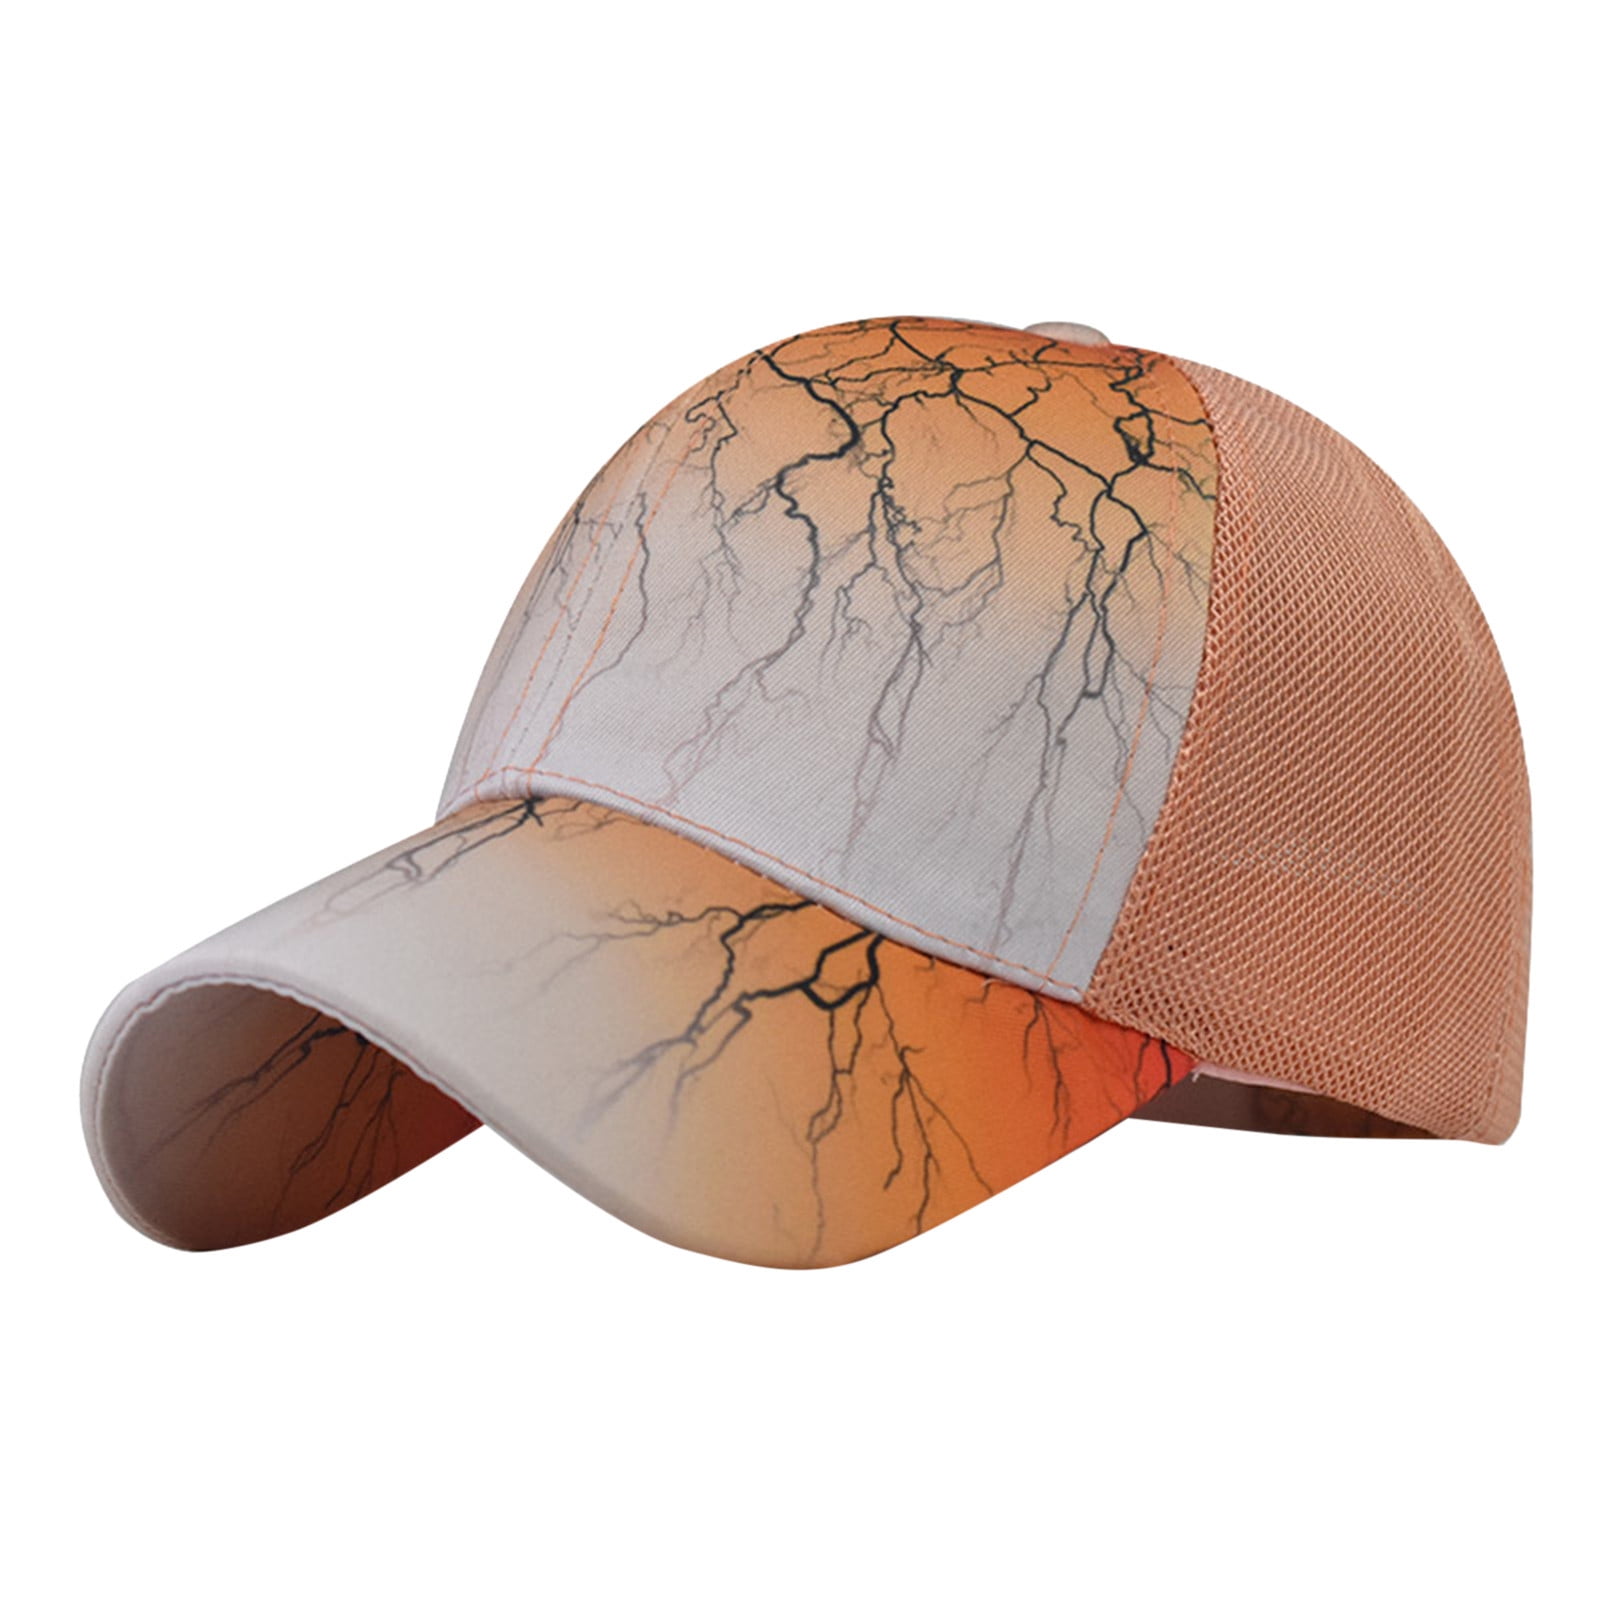 Baseball Cap Men/Women stripes Sunshade Adjustable Outdoor Travel Casual Hat 